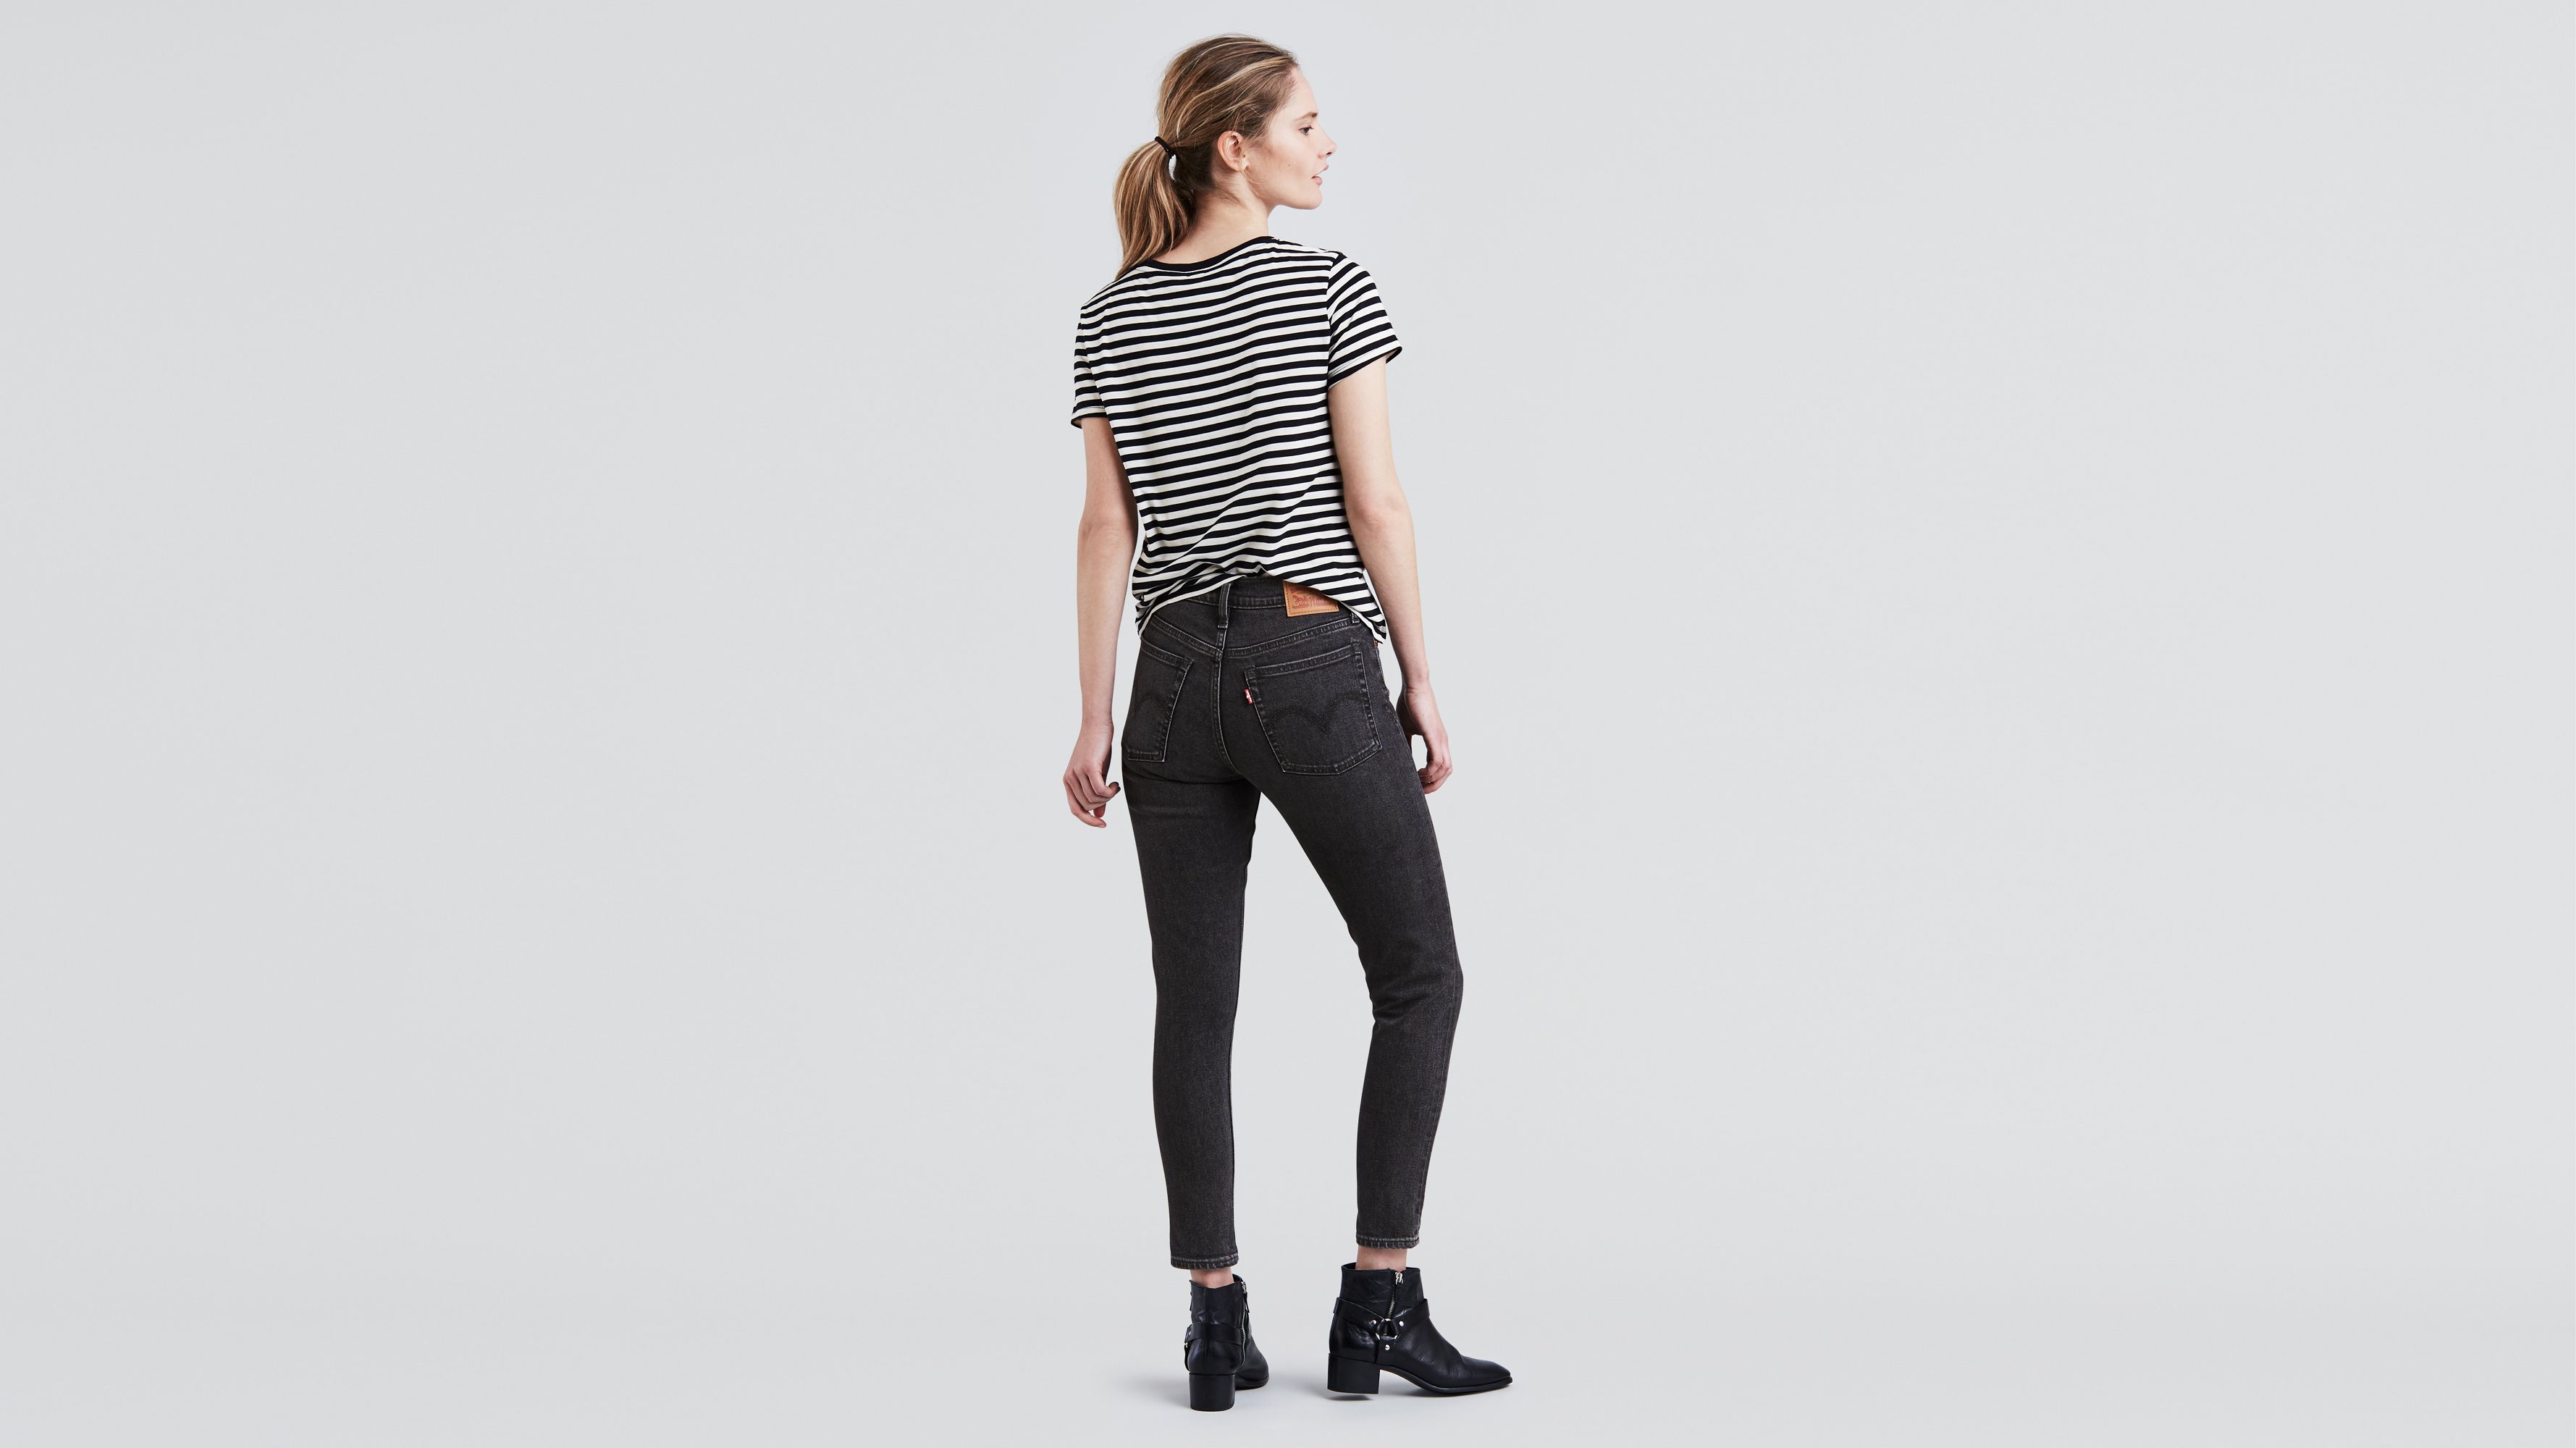 Wedgie Fit Skinny Women's Jeans - Black | Levi's® US